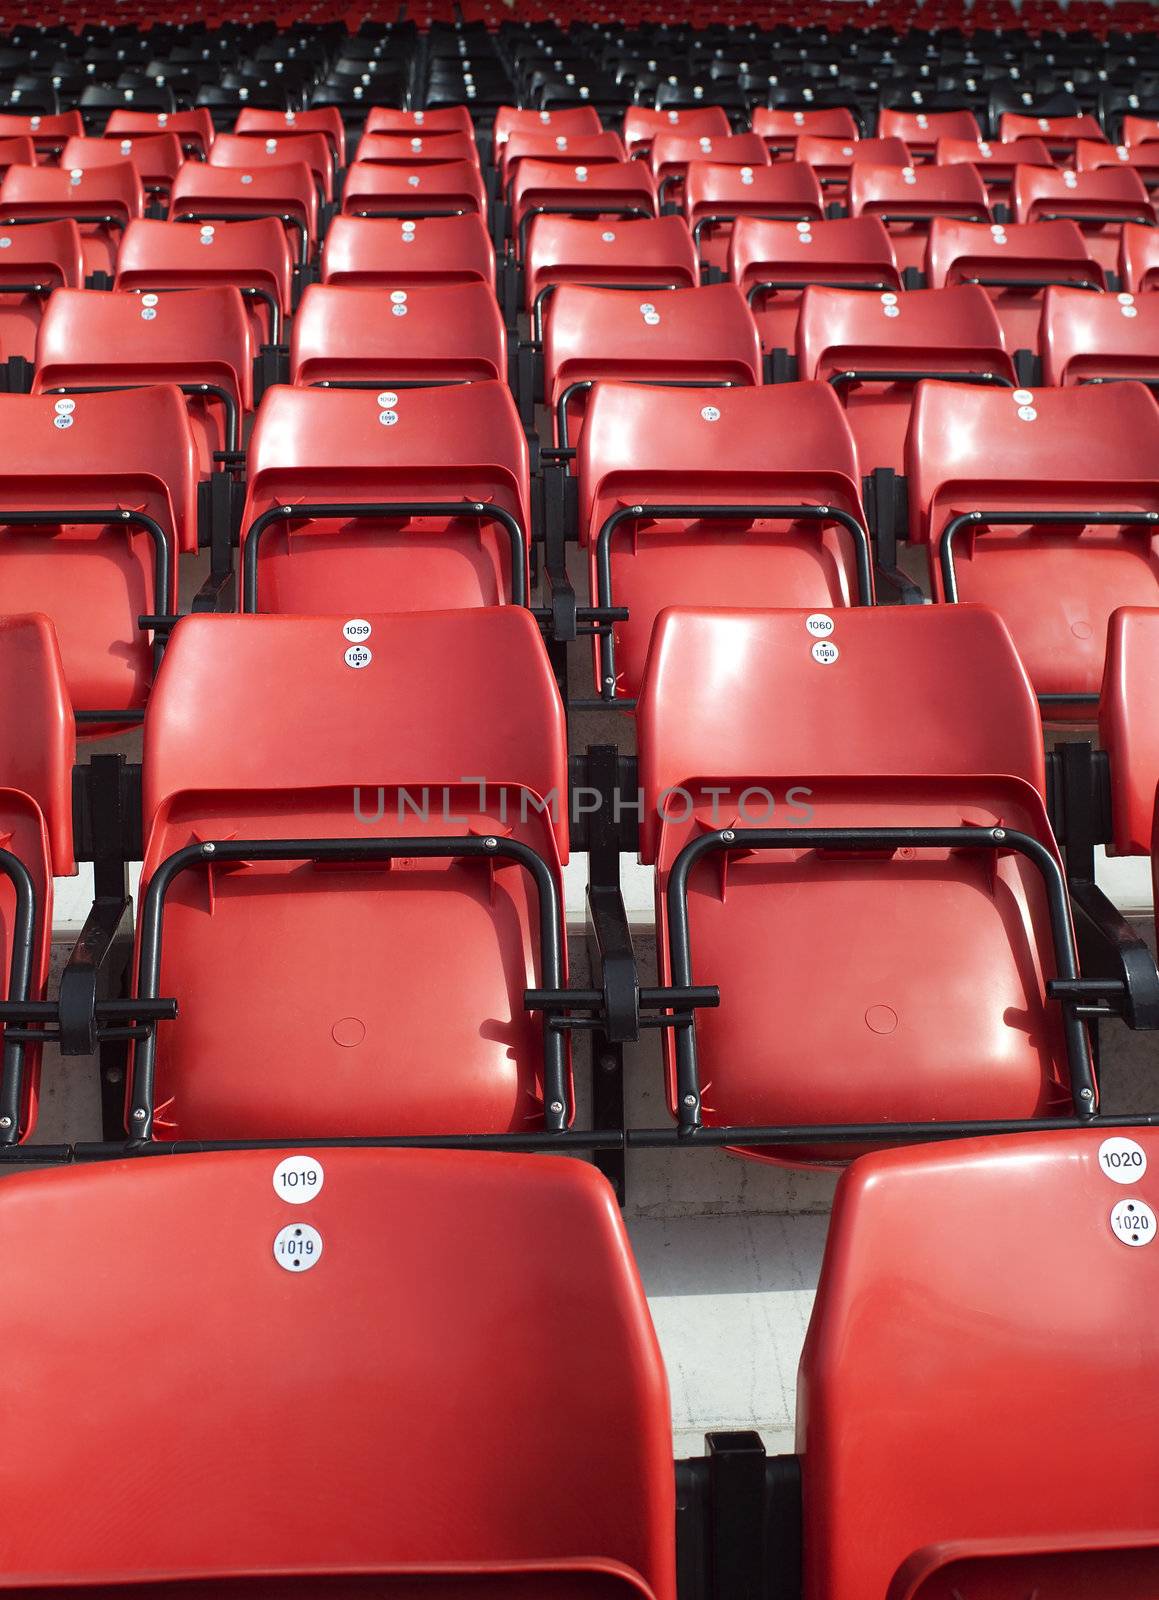 Spectators seats by gemenacom